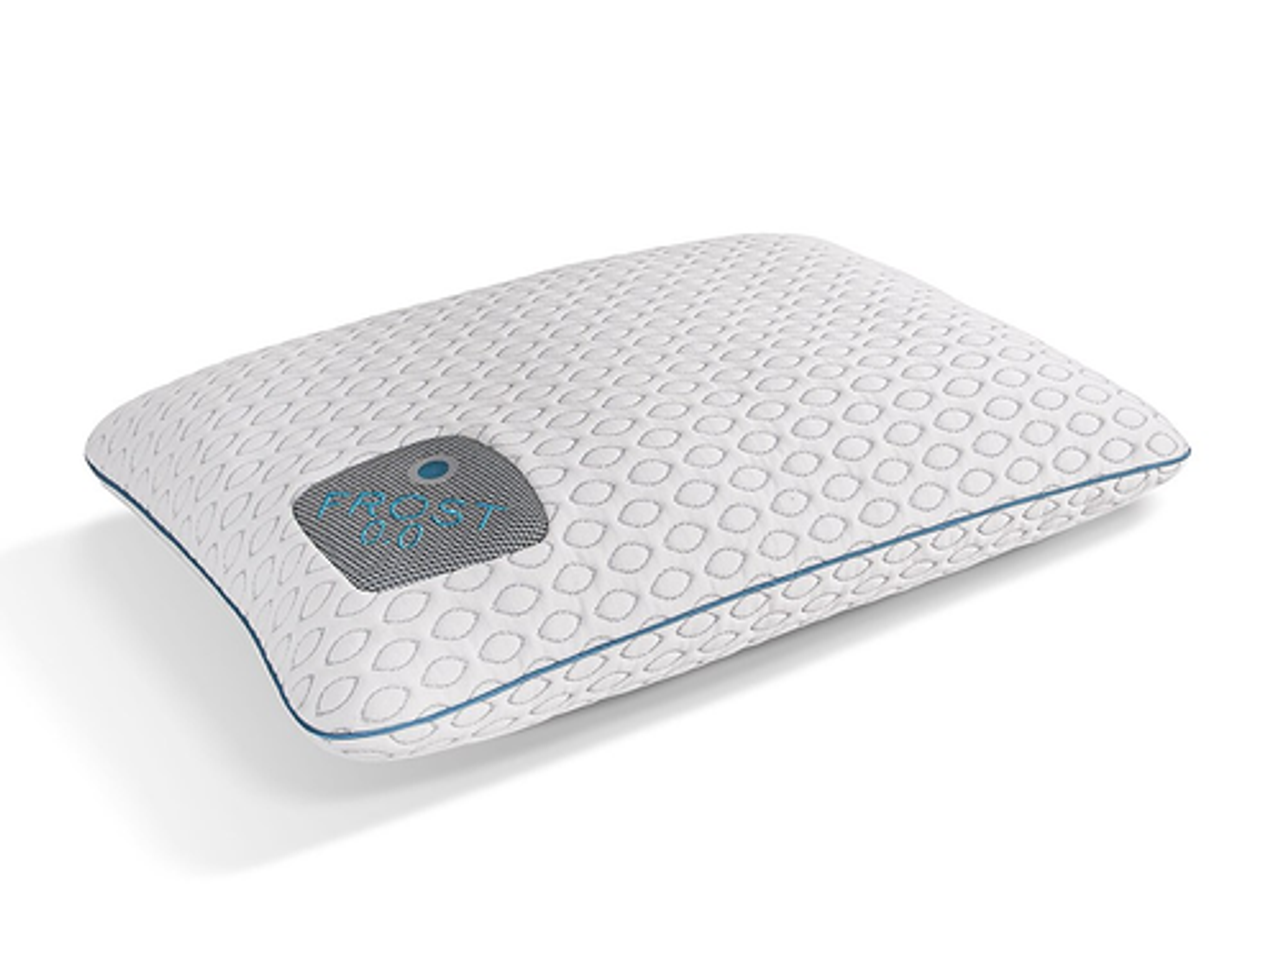 Bedgear - Frost King Pillow 0.0 - White